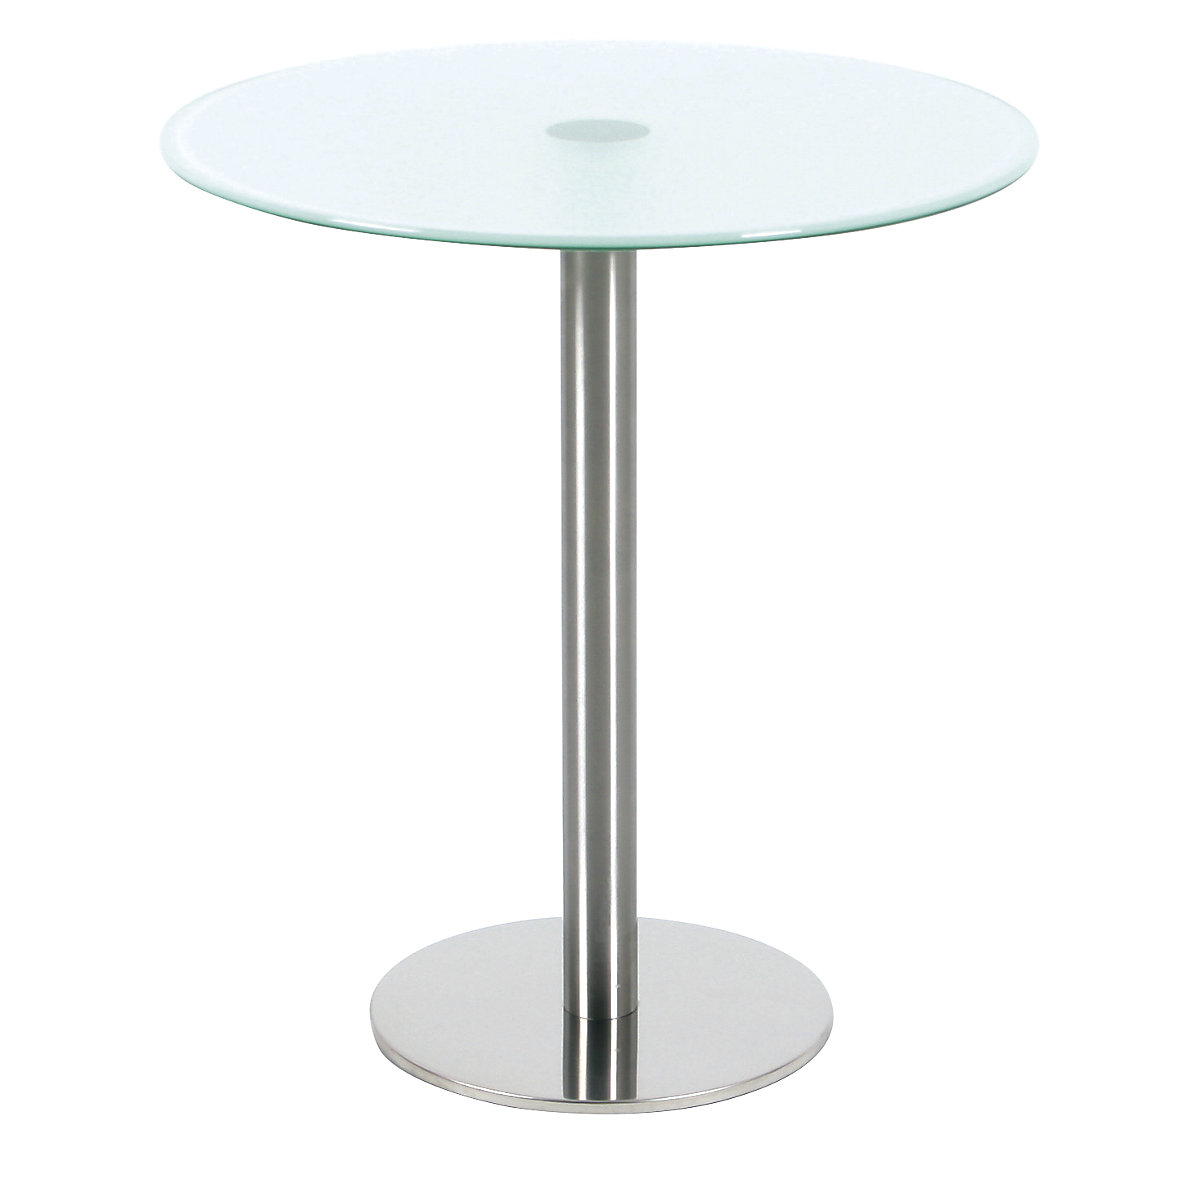 Okrogla dodatna miza, V x Ø 550 x 495 mm, satinirana steklena plošča-1